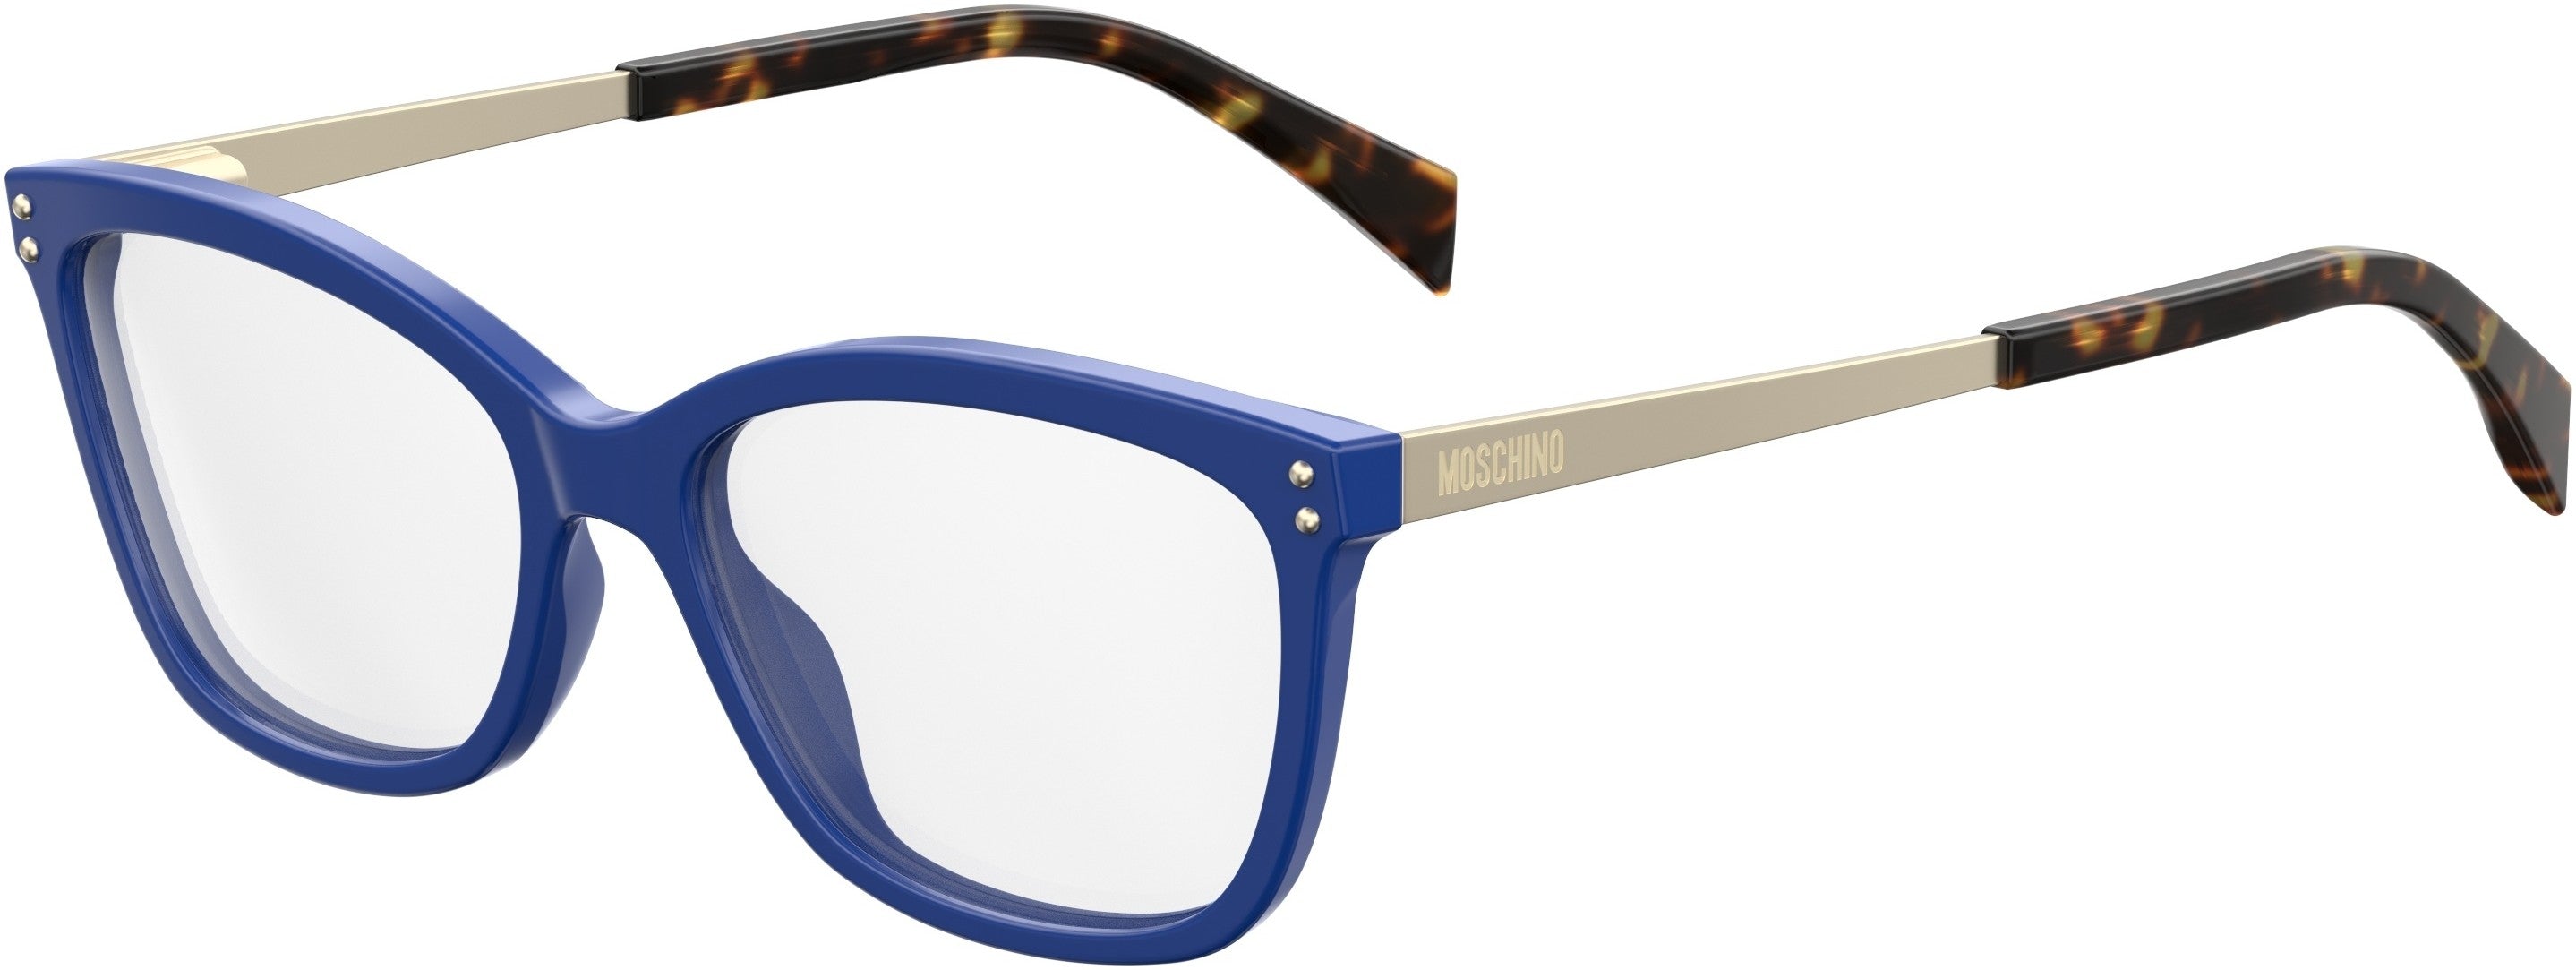  Moschino 504 Square Eyeglasses 0PJP-0PJP  Blue (00 Demo Lens)